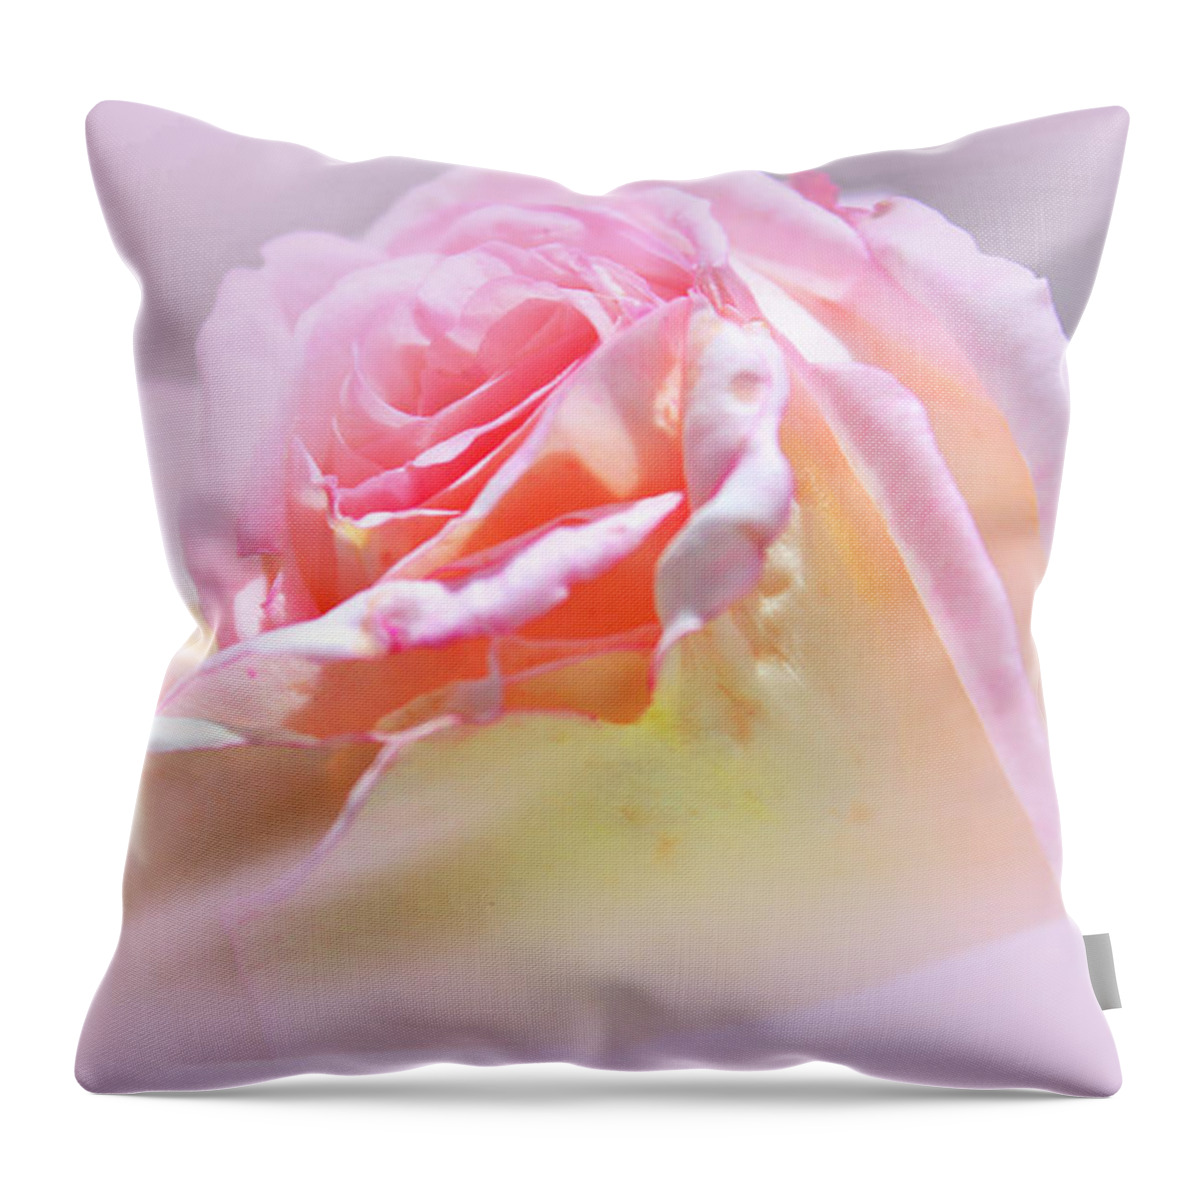 Rose Throw Pillow featuring the photograph Peaceful Pink Rose Haze by Judy Palkimas